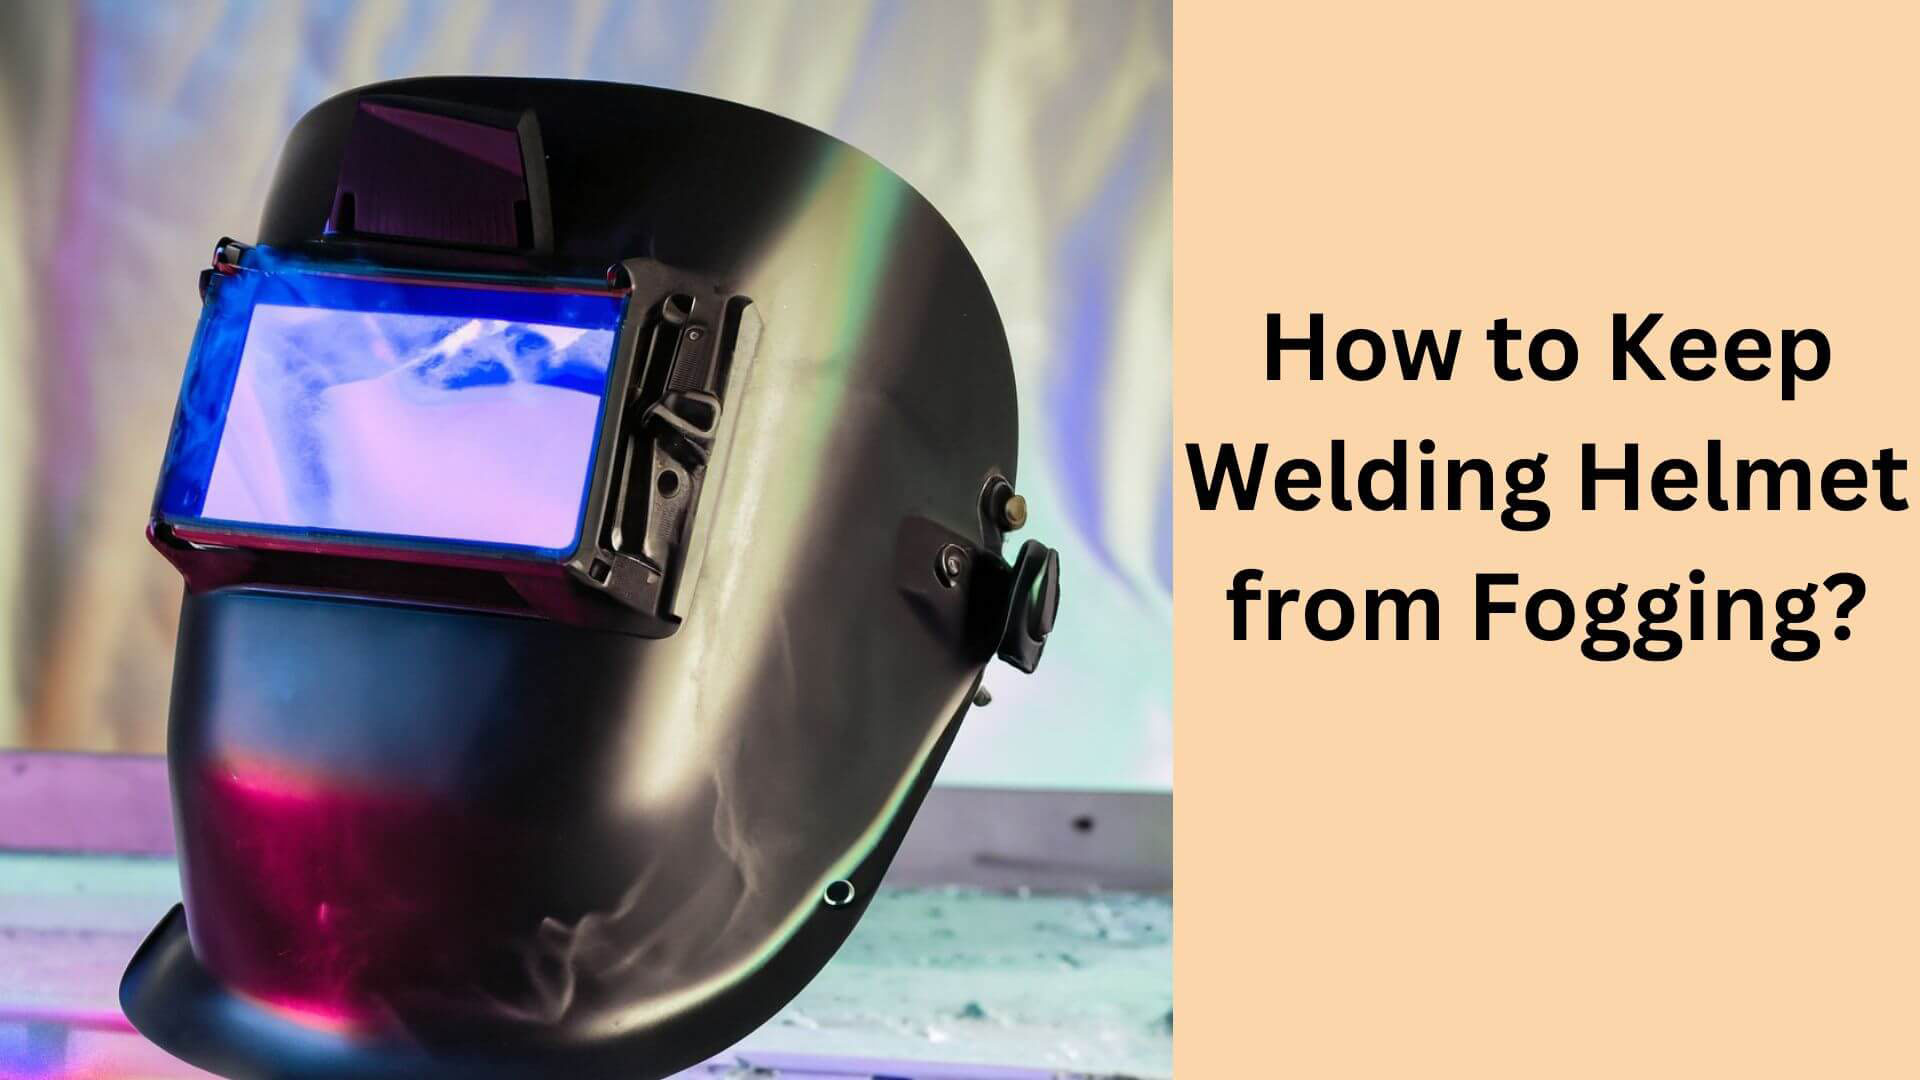 How to Keep Welding Helmet from Fogging?